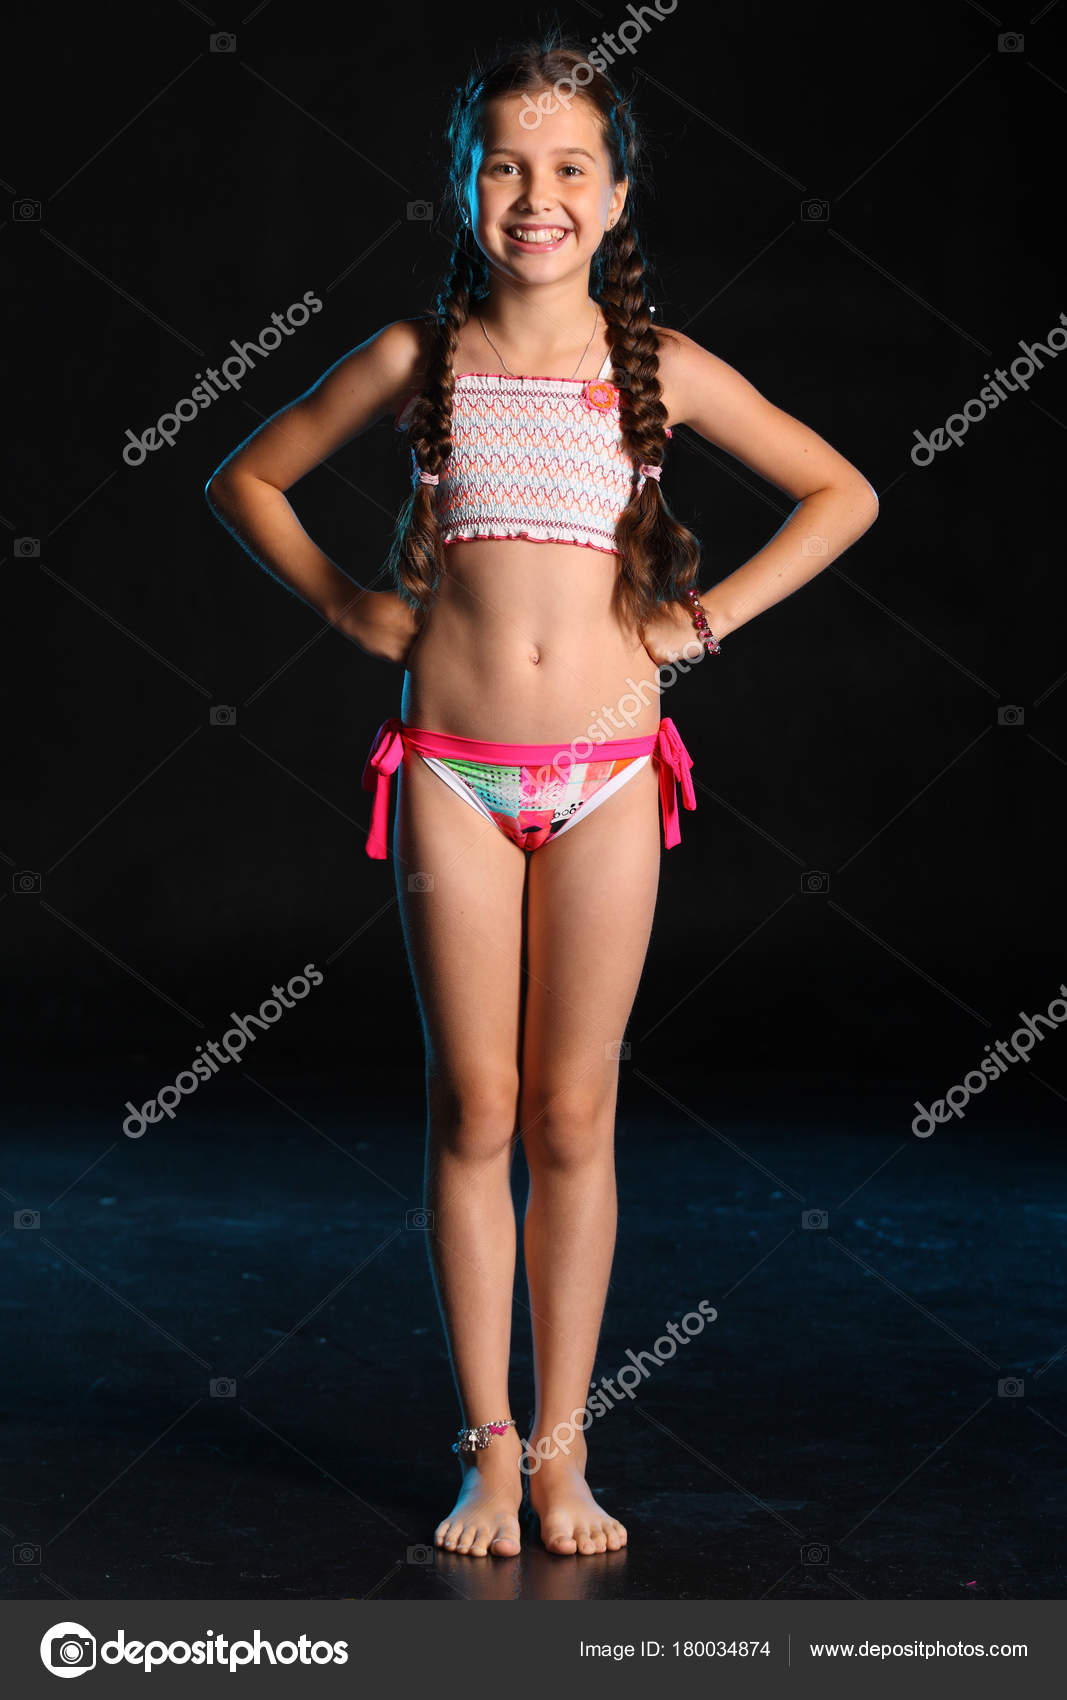 superávit doblado motivo Adolescente bikini fotos de stock, imágenes de Adolescente bikini sin  royalties | Depositphotos